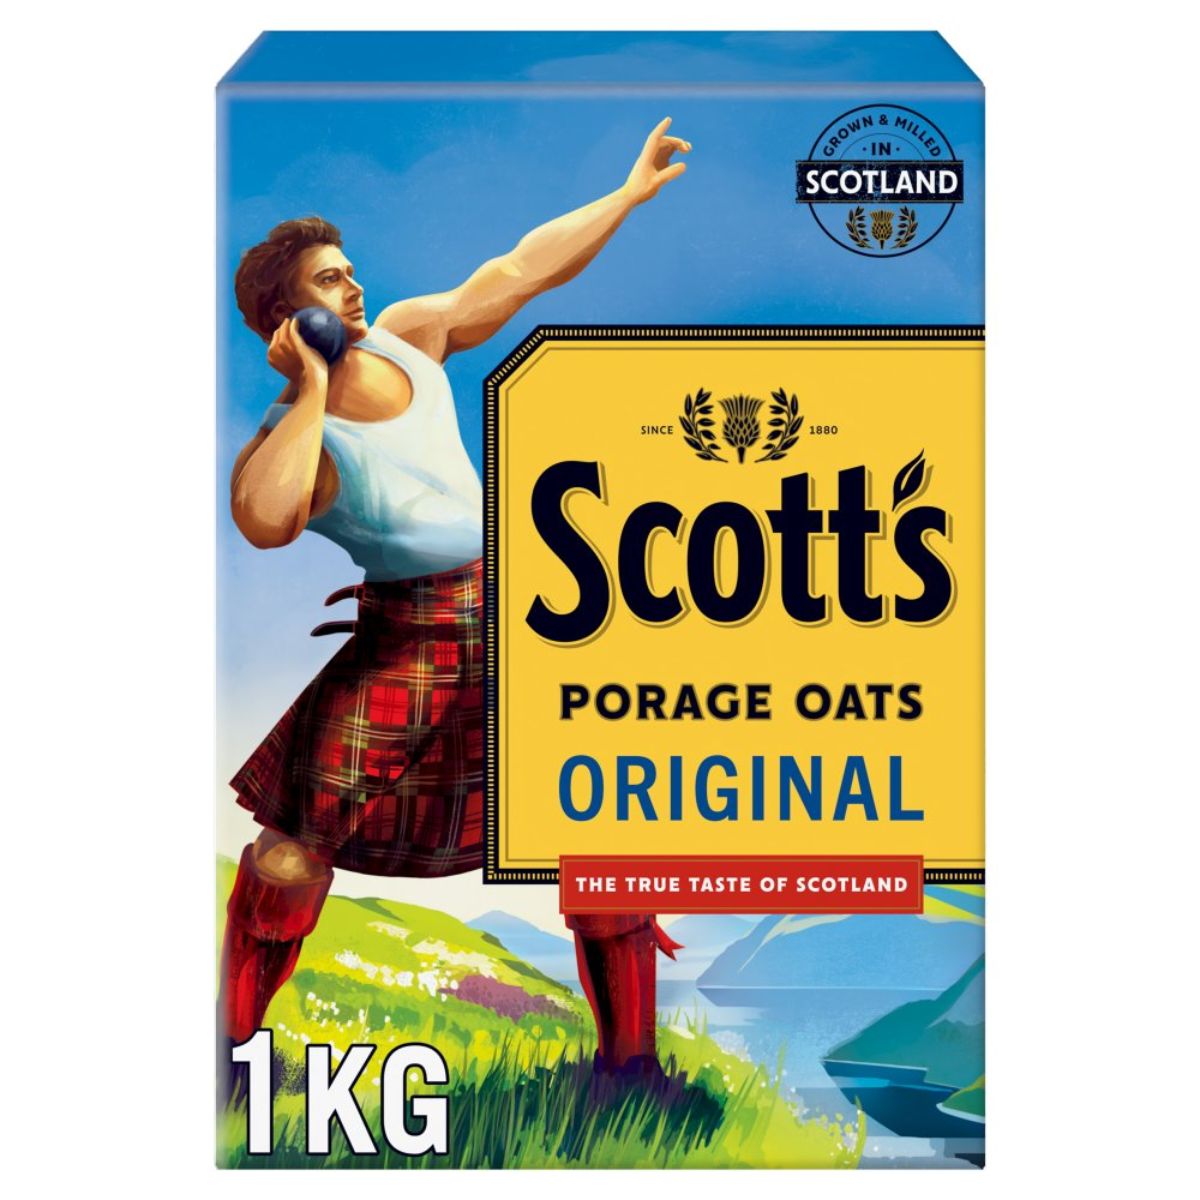 Scotts - Porage Original Porridge Oats - 1kg.